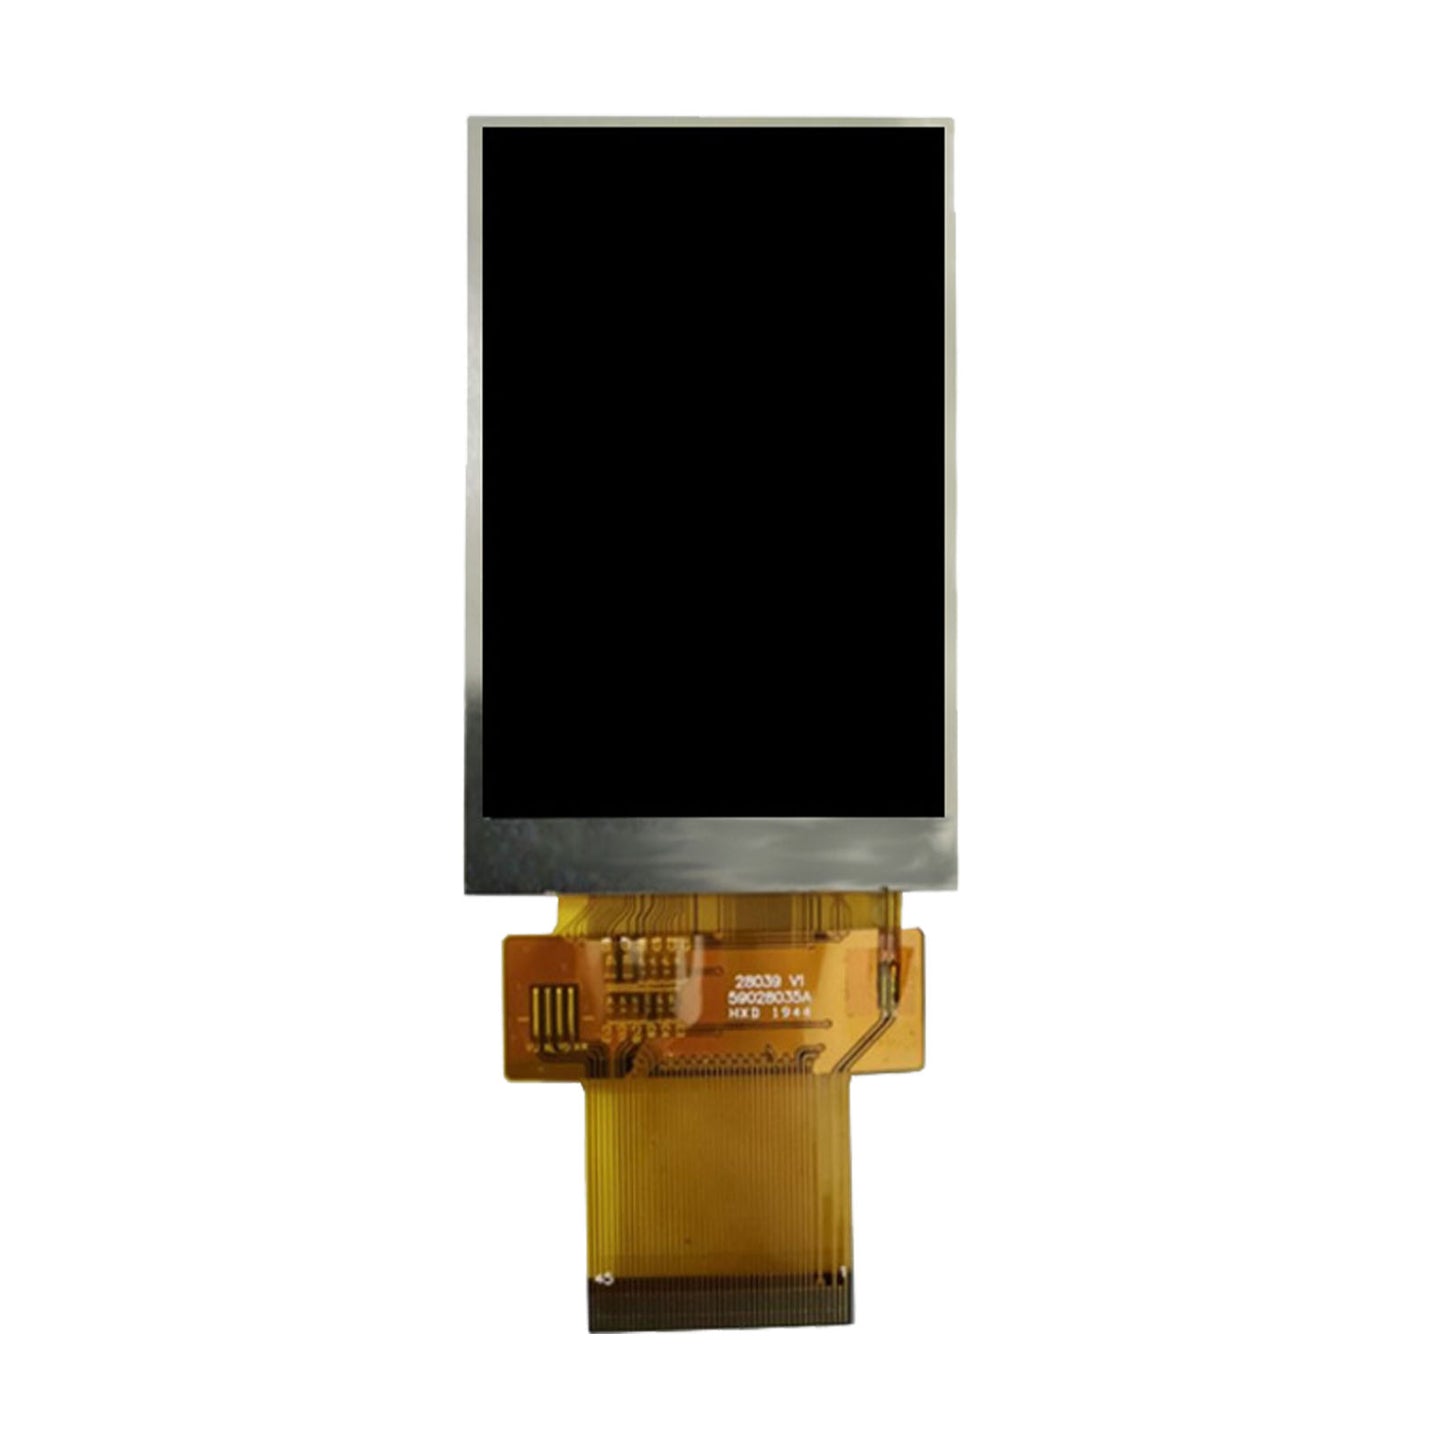 DisplayModule 2.8" 240X400 Transflective Display Panel – MCU/SPI/RGB